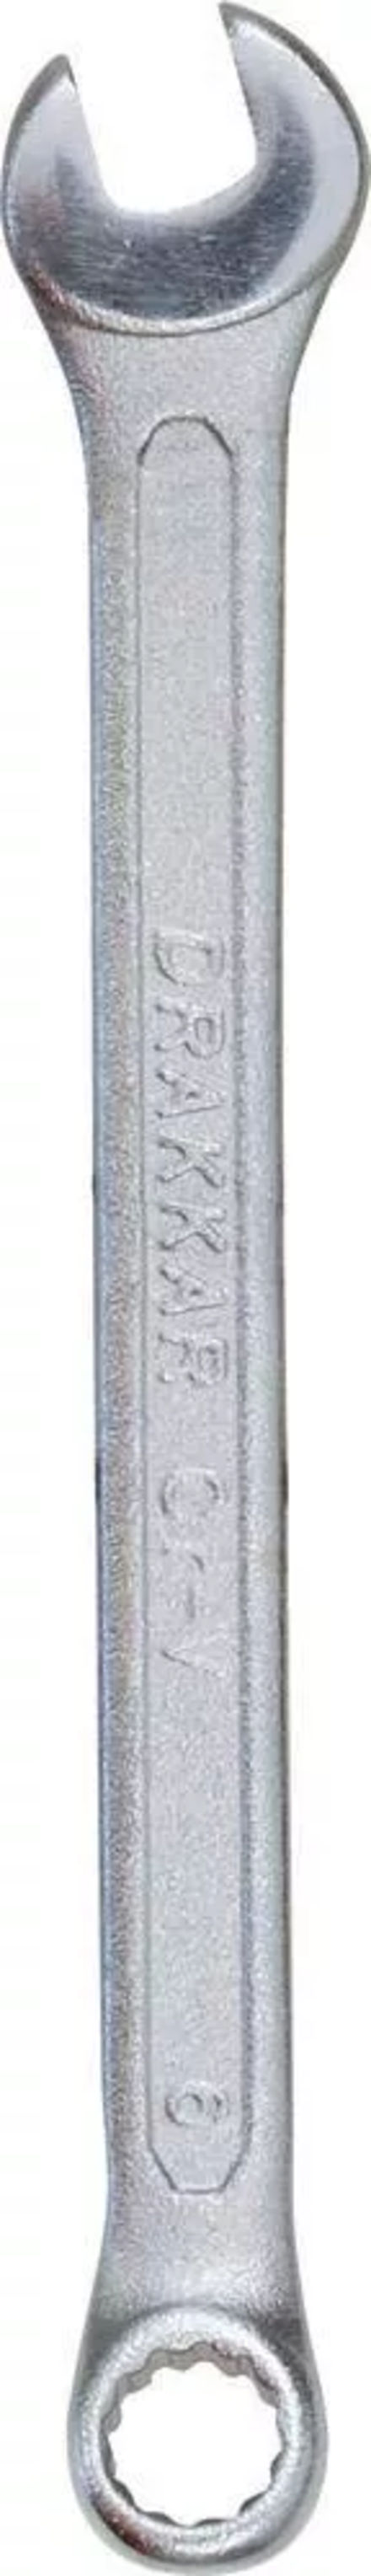 Cle mixte tete polie 6mm DRAKKAR TOOLS - 13756